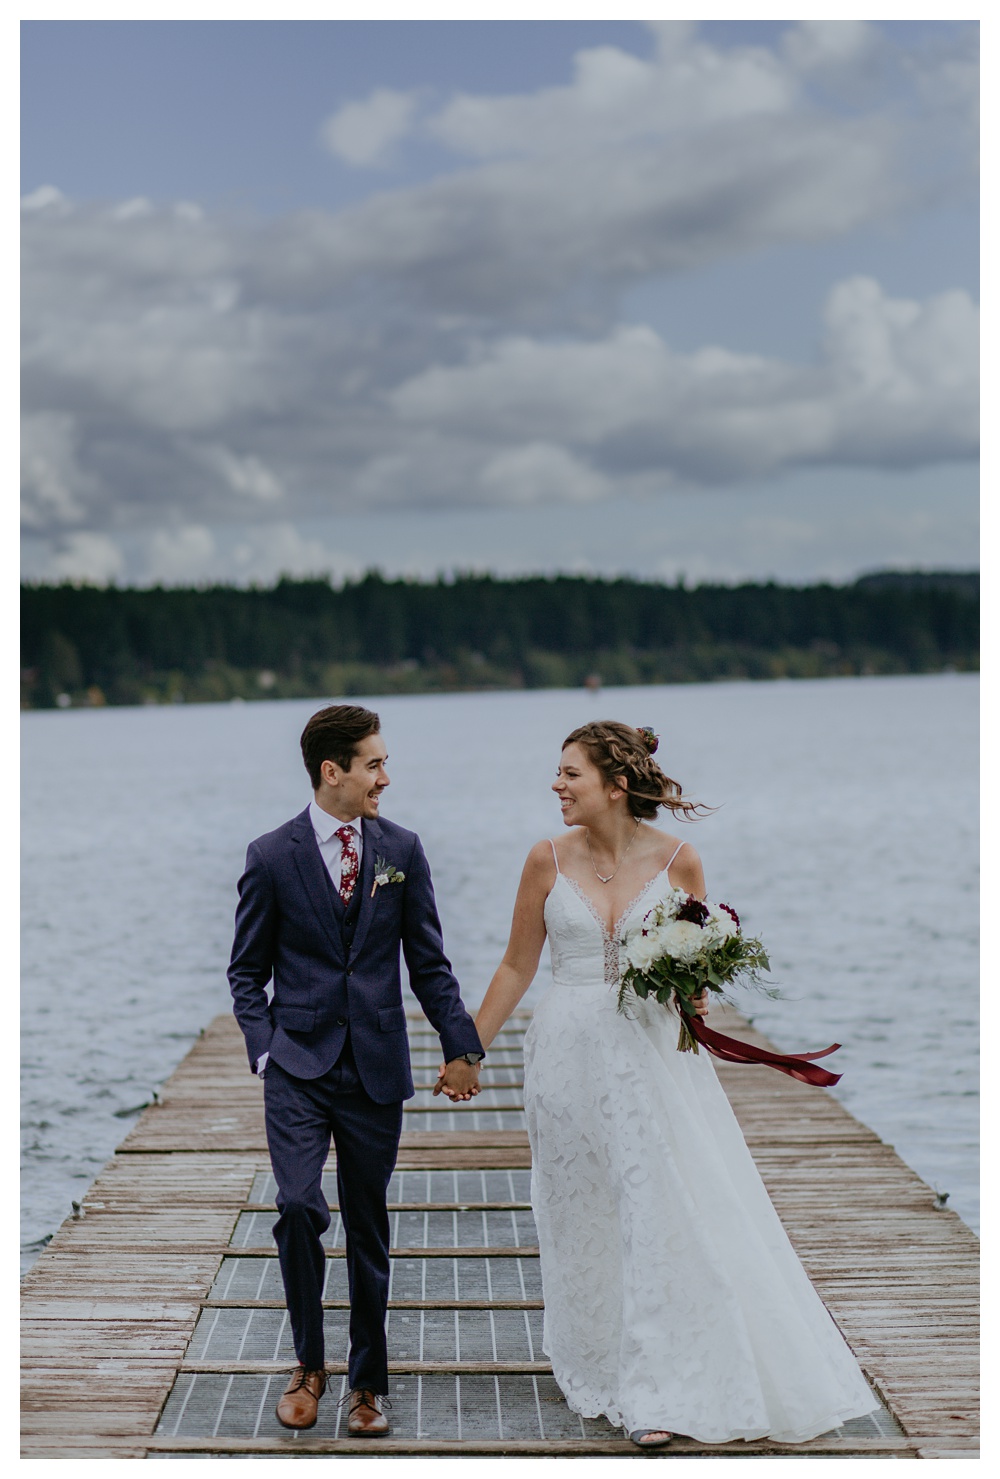 the bride and groom walk on the dock towards the camera at Kiana Lodge.